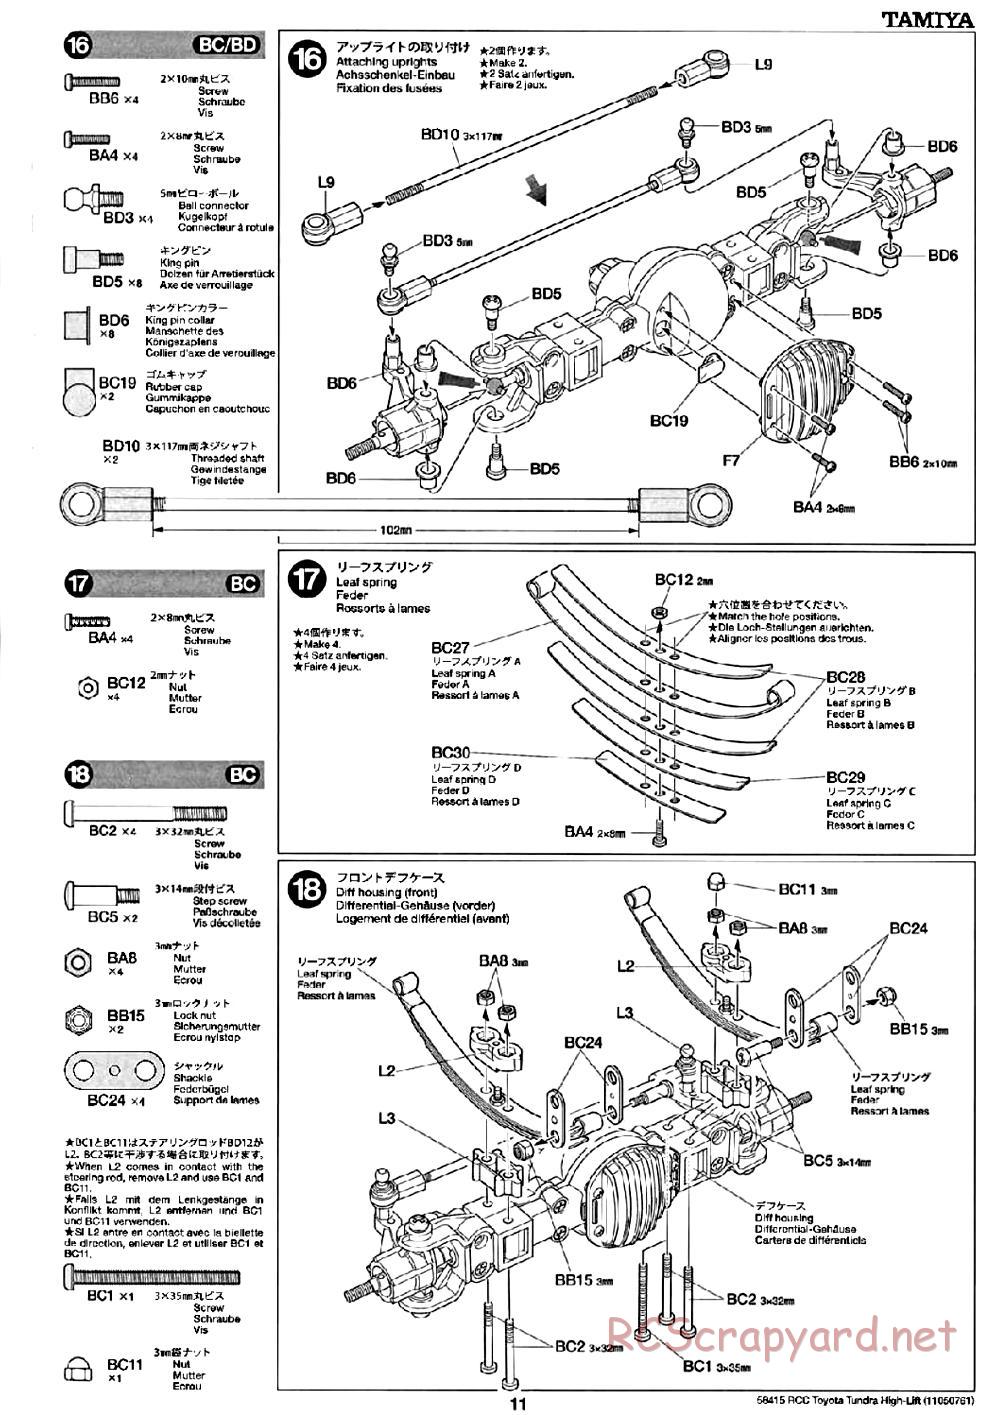 Tamiya - Toyota Tundra High-Lift Chassis - Manual - Page 11